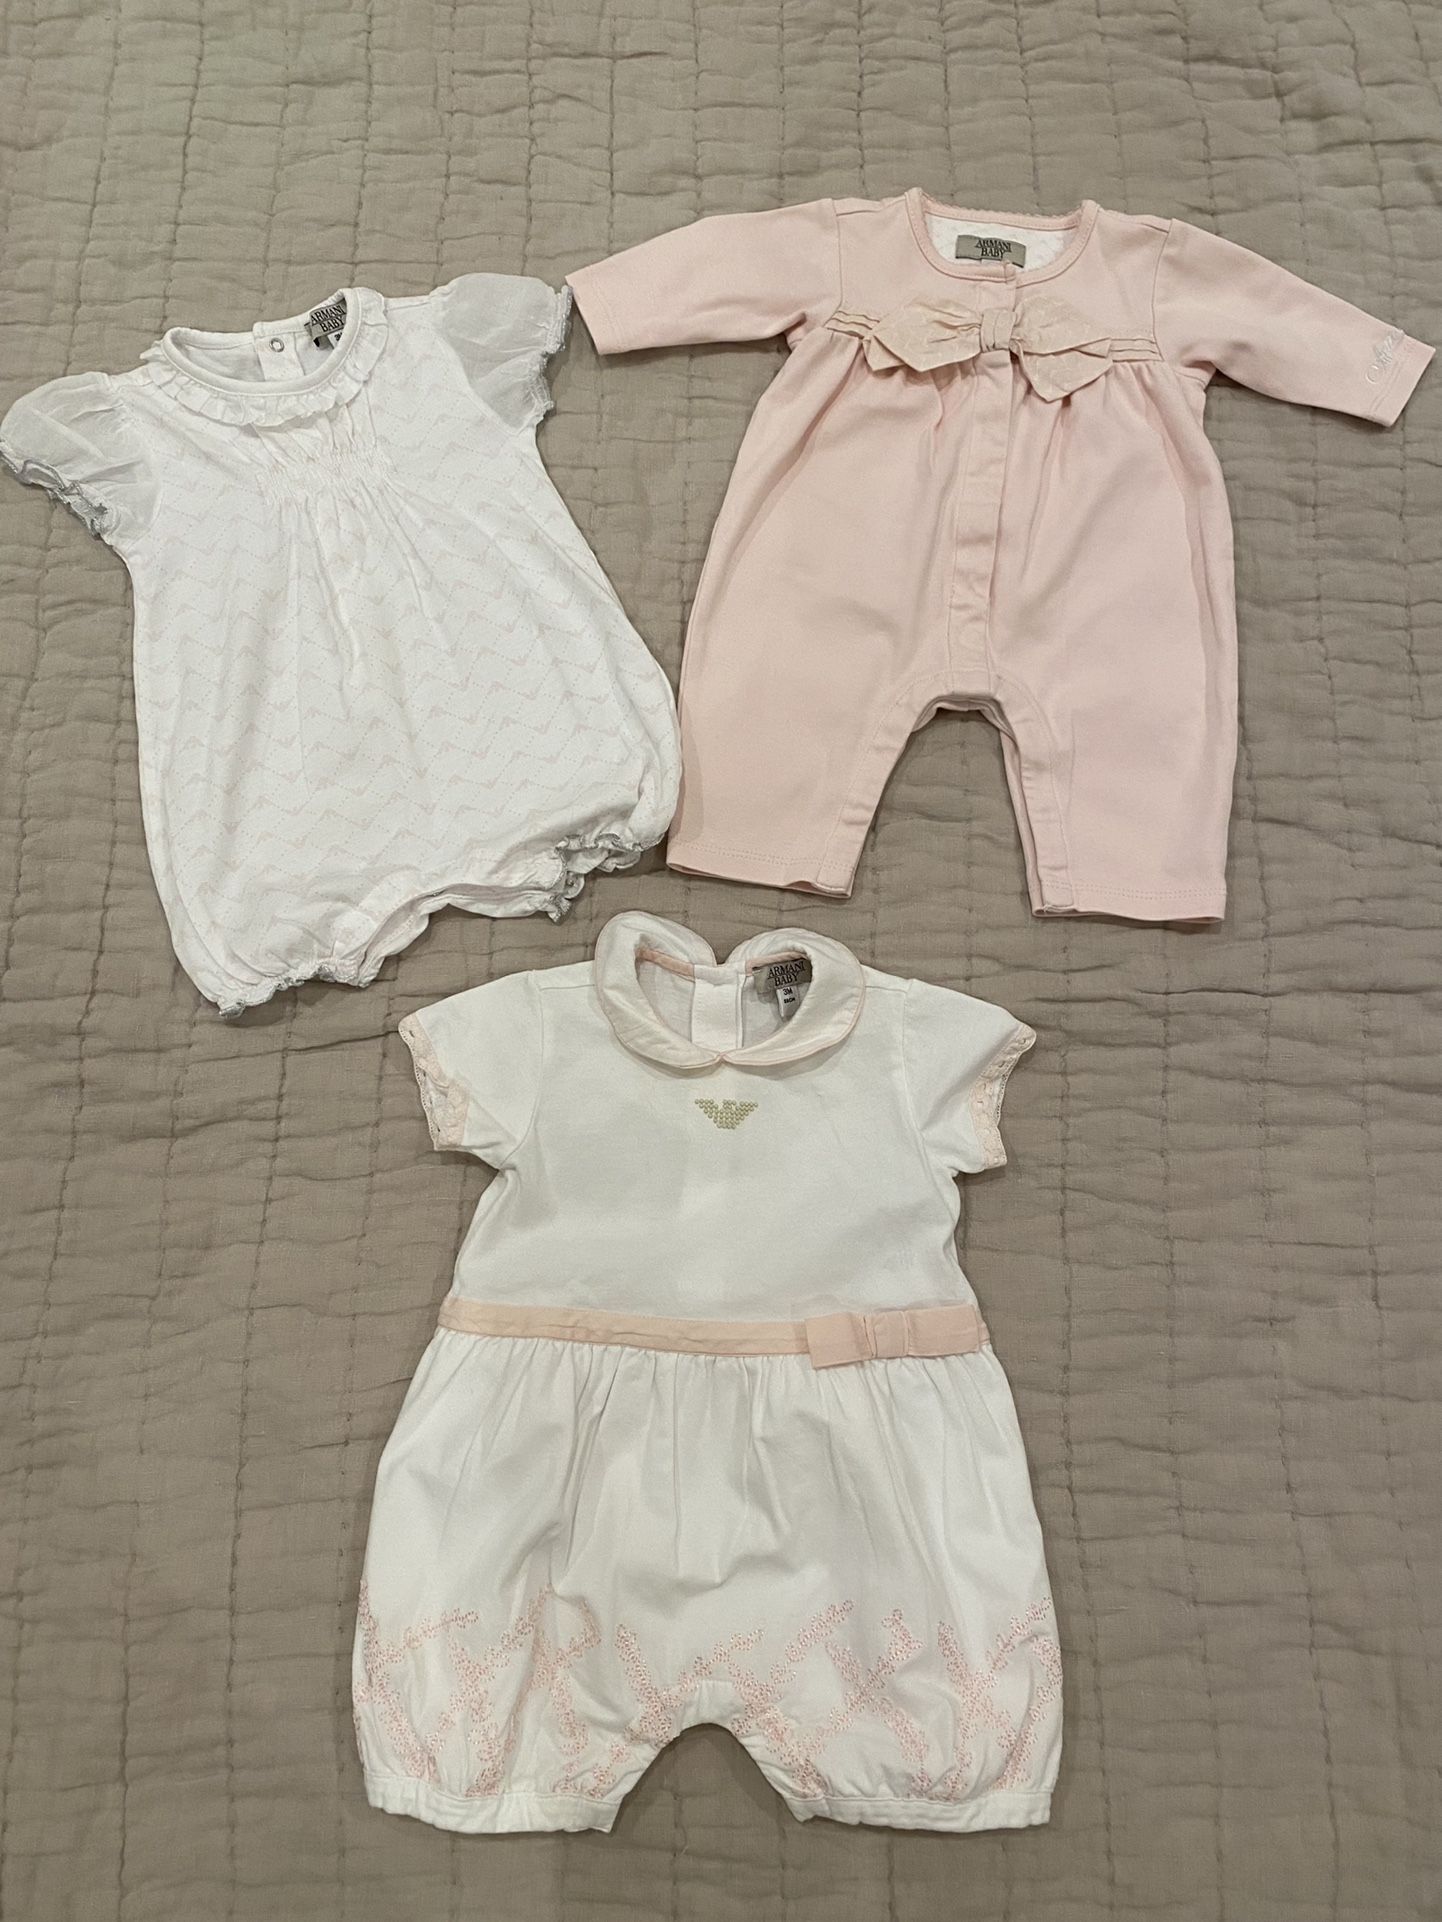 Armani Baby Girl Clothes